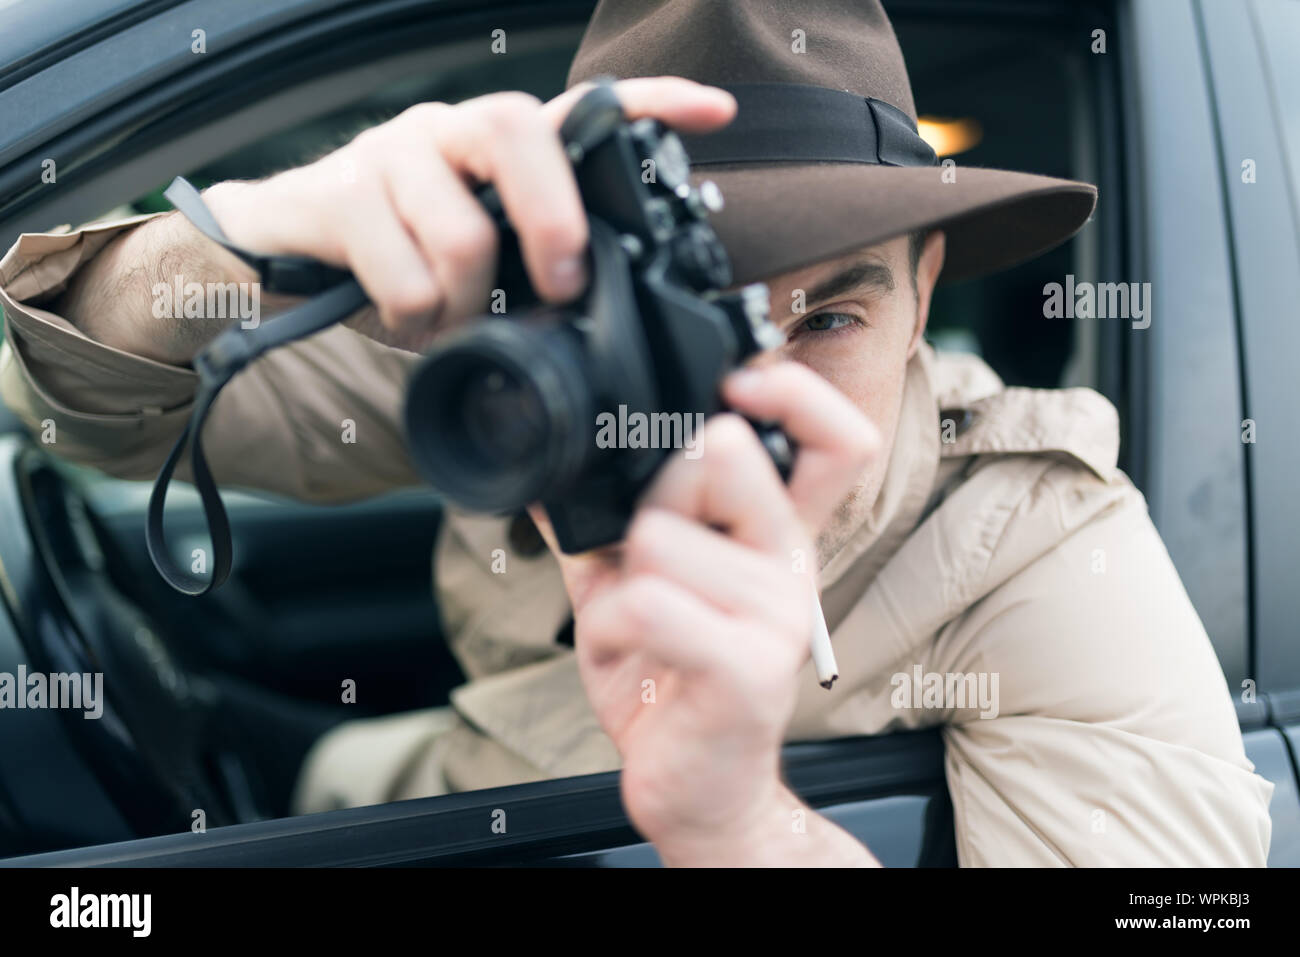 Spy or paparazzo photographer, man using camera in his car Stock Photo